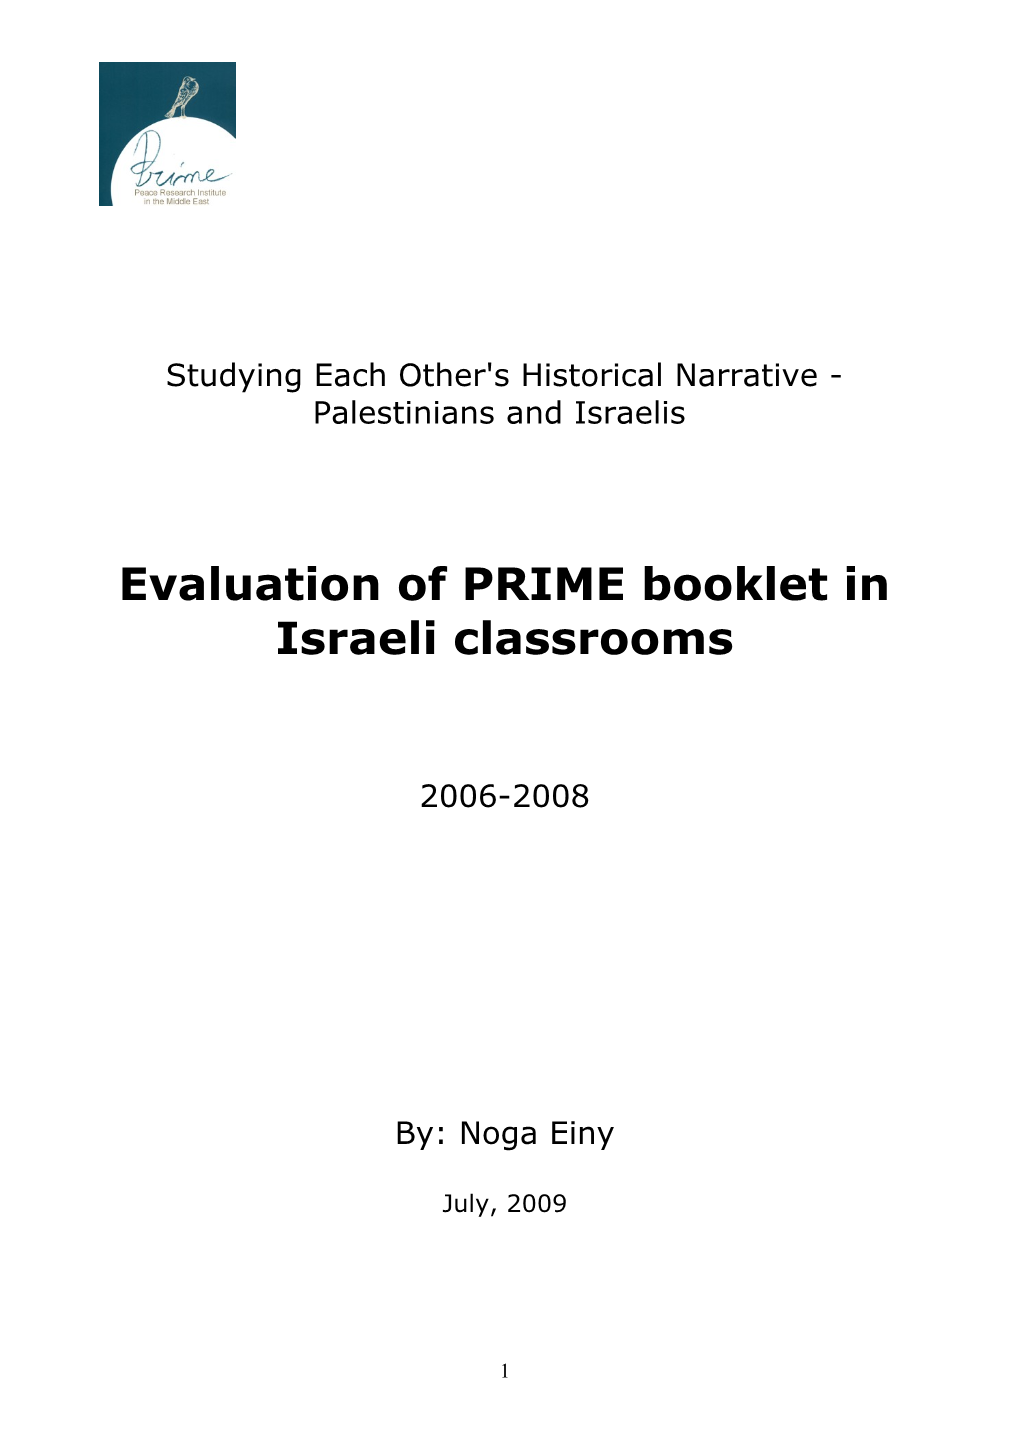 Evaluation of PRIME Booklet Israeli Classes